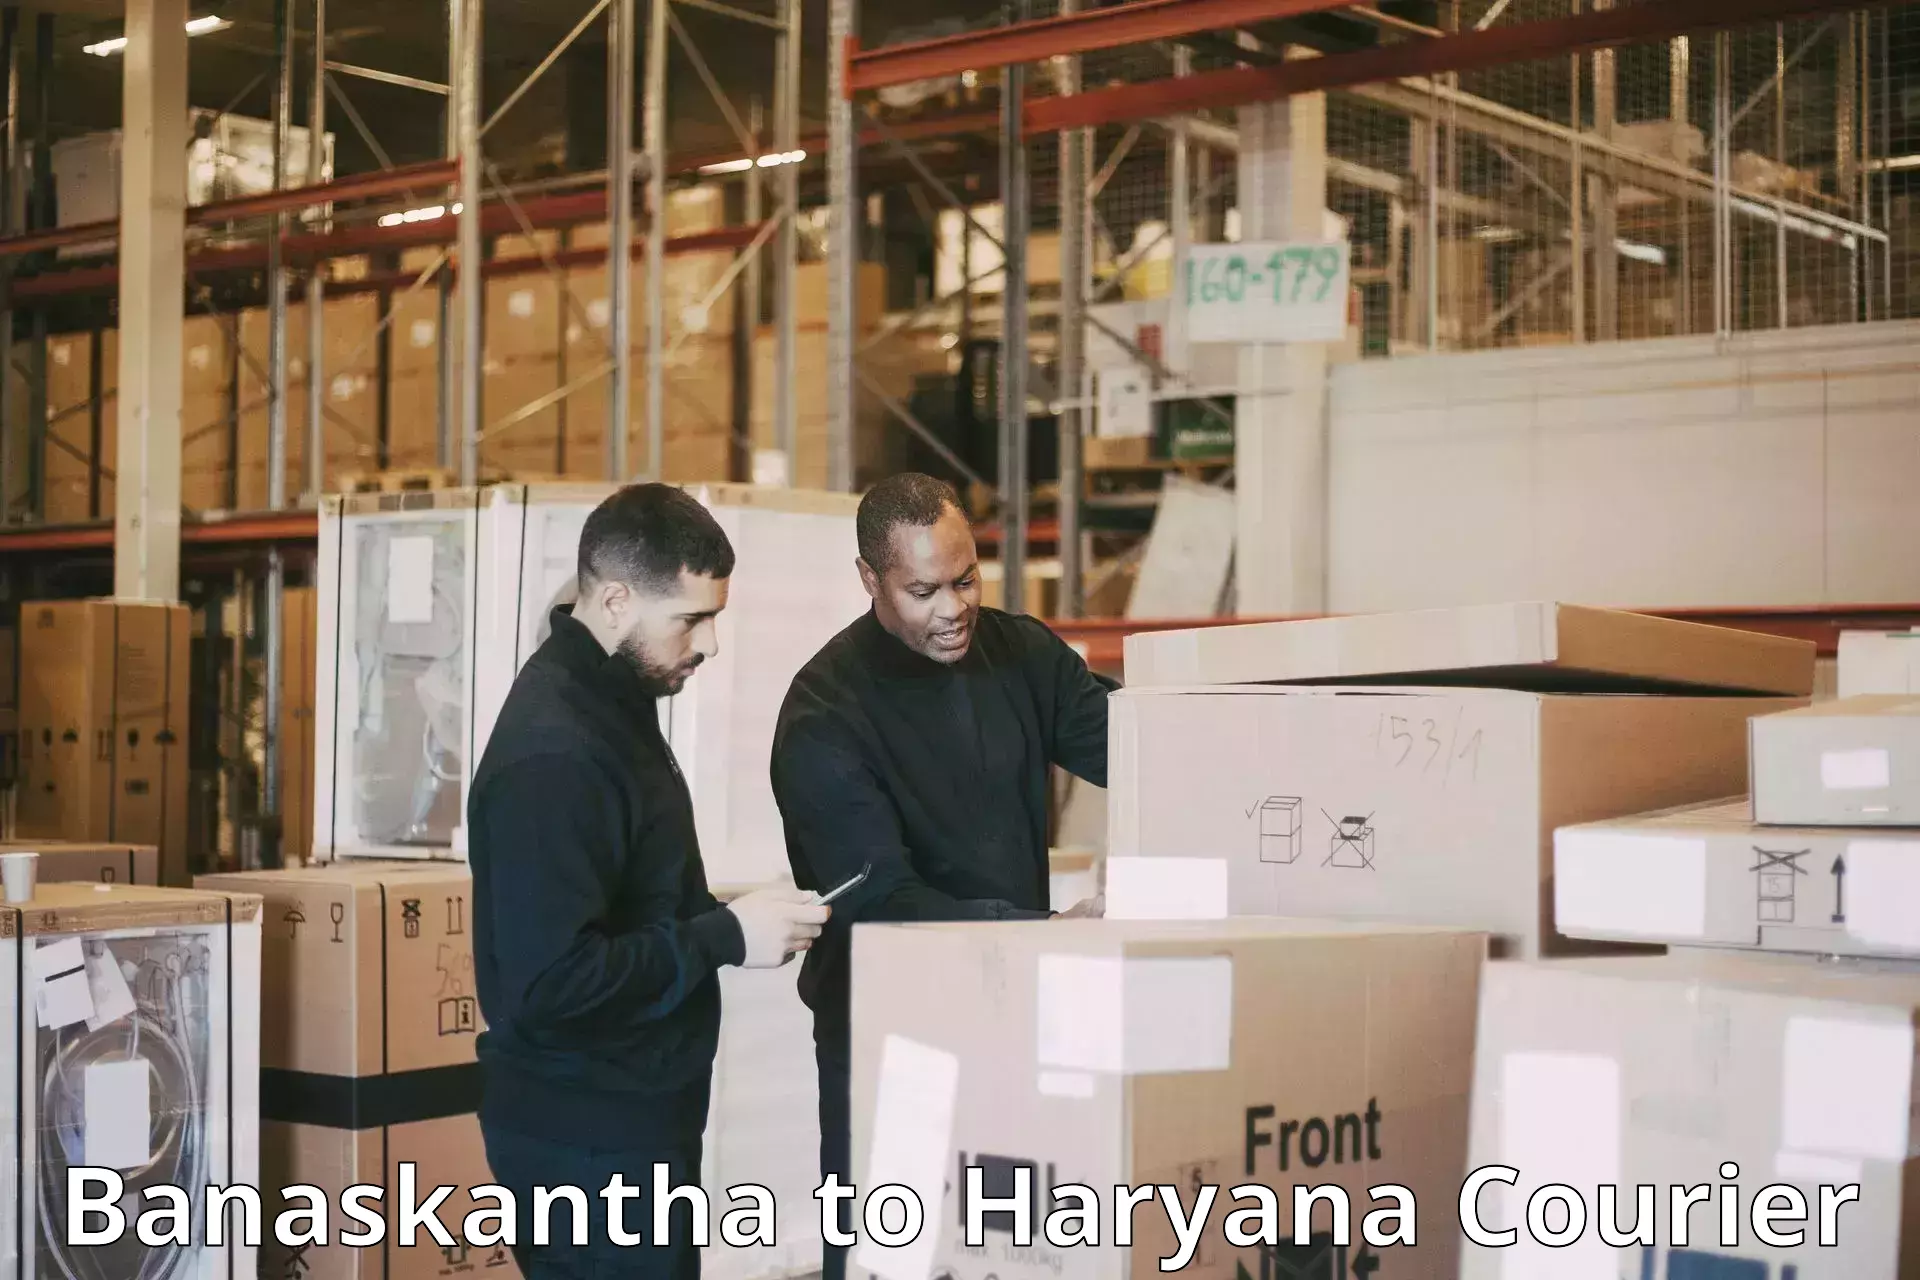 Courier service innovation Banaskantha to Haryana